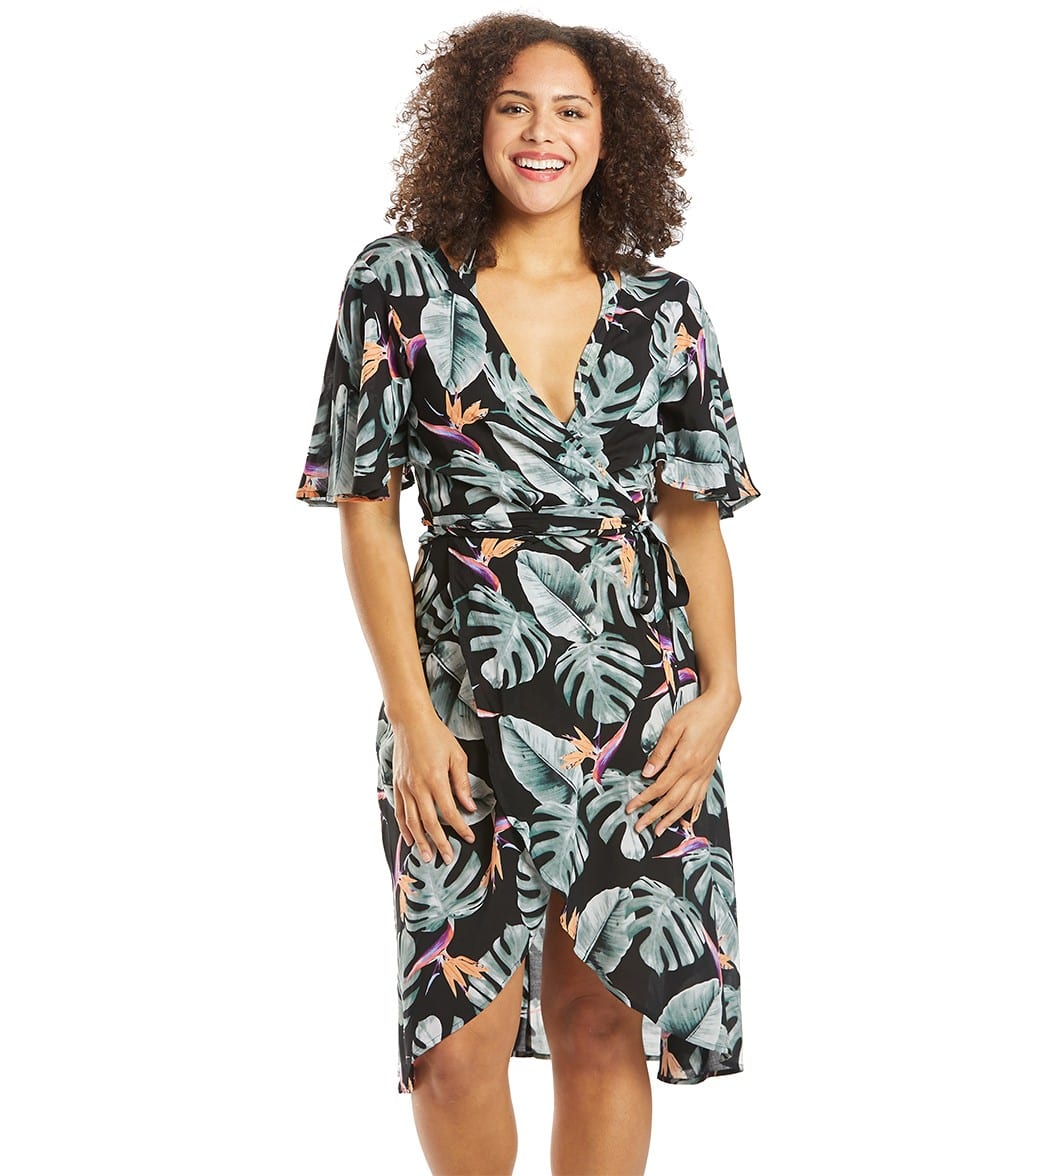 Skye Grace Cover Up Dress - Black/Tokelau Print Small - Swimoutlet.com